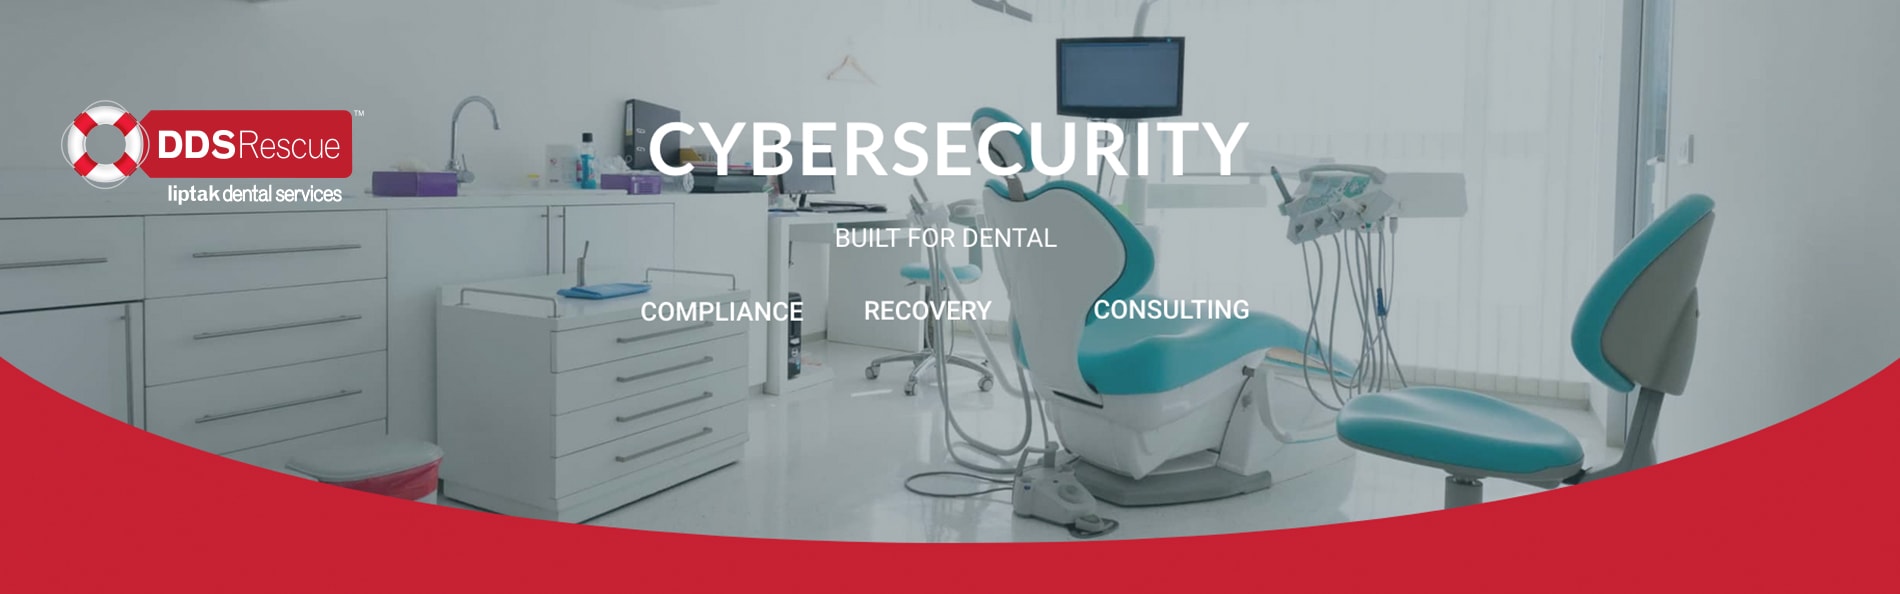 DDRescue-cybersecurity-dental-office-practice-solution